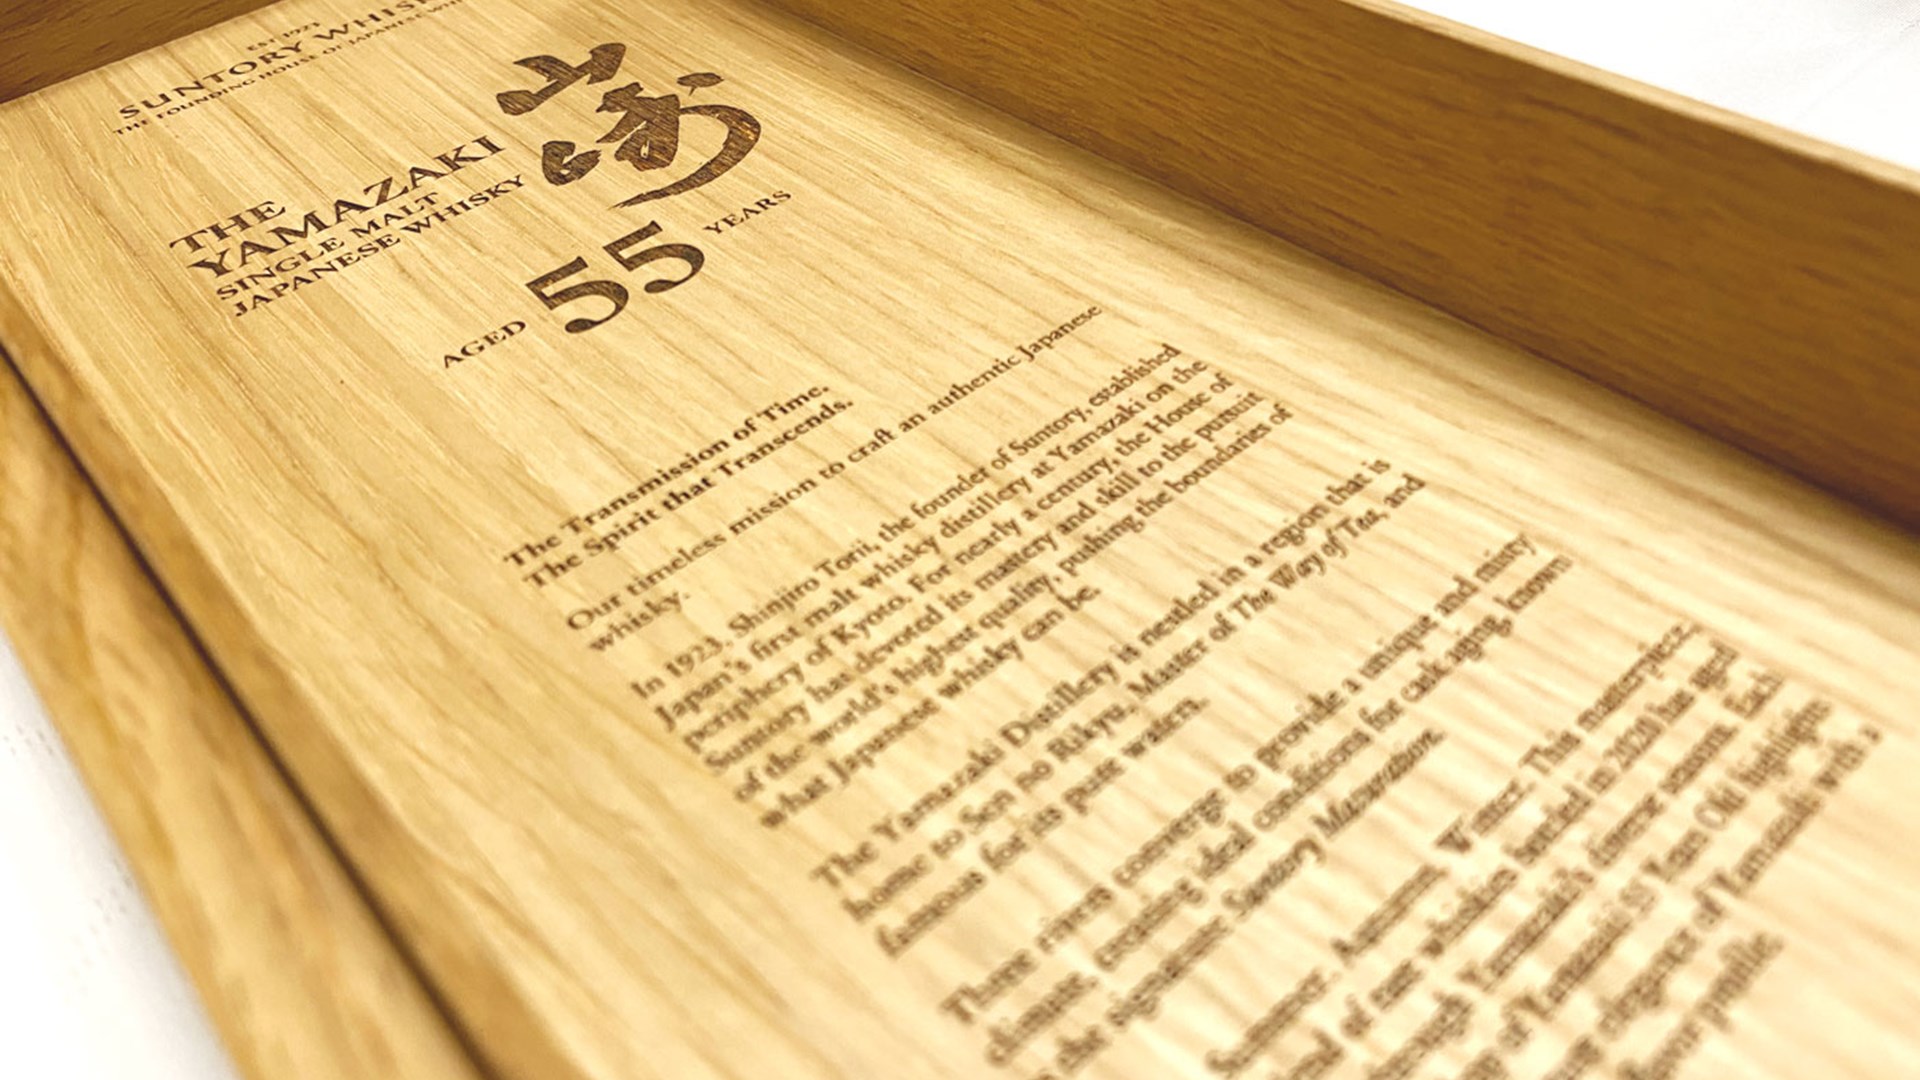 Yamazaki 55 Years old comes in a custom box made out of Mizunara wood